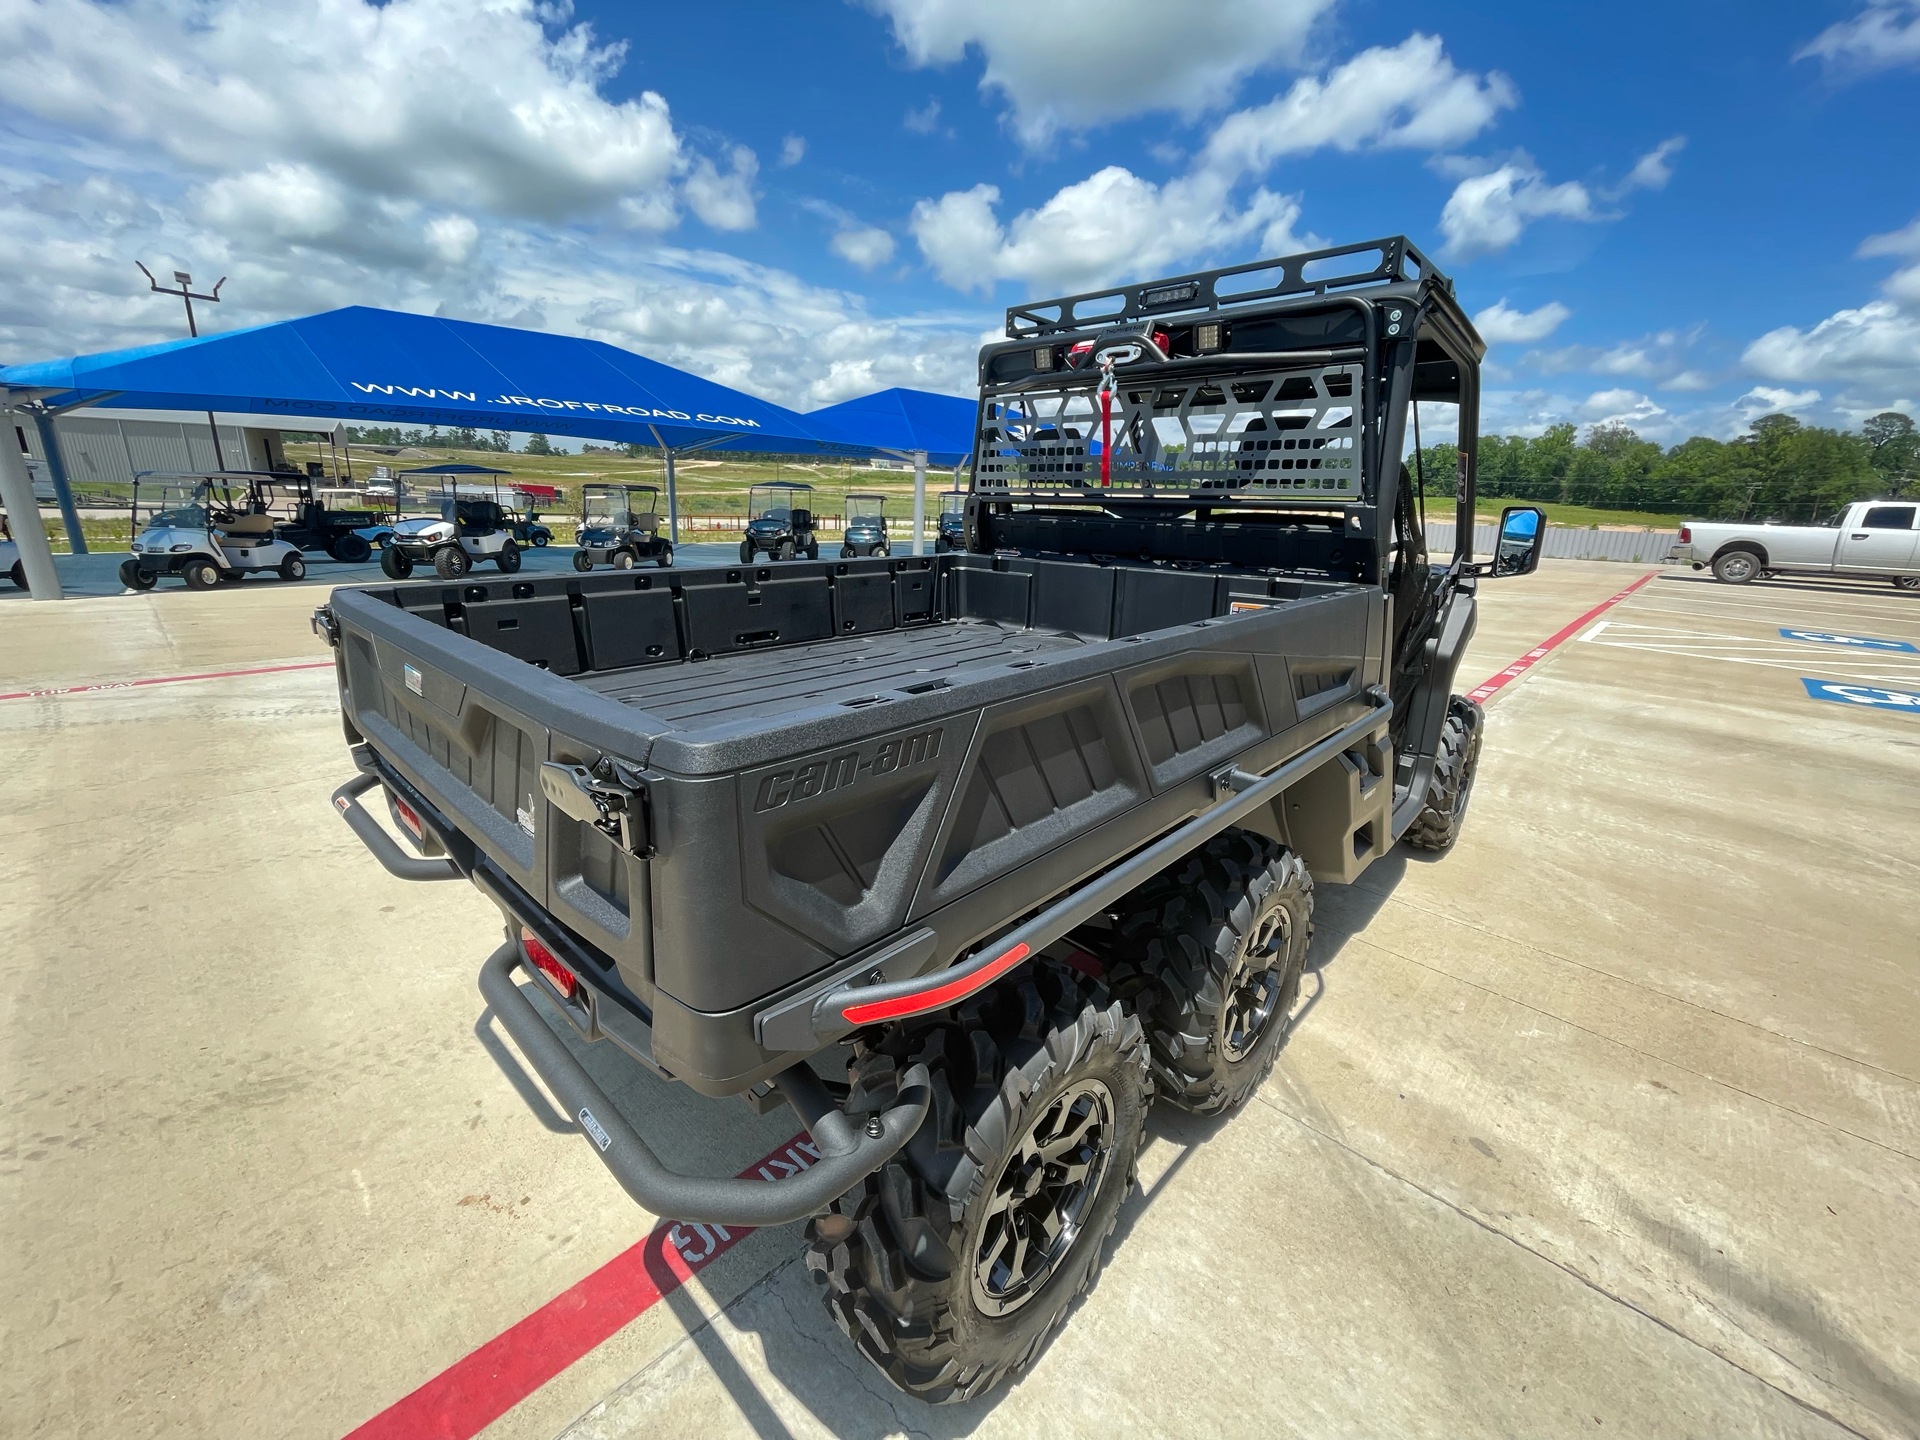 2023 Can-Am Defender 6x6 XT HD10 in Huntsville, Texas - Photo 6